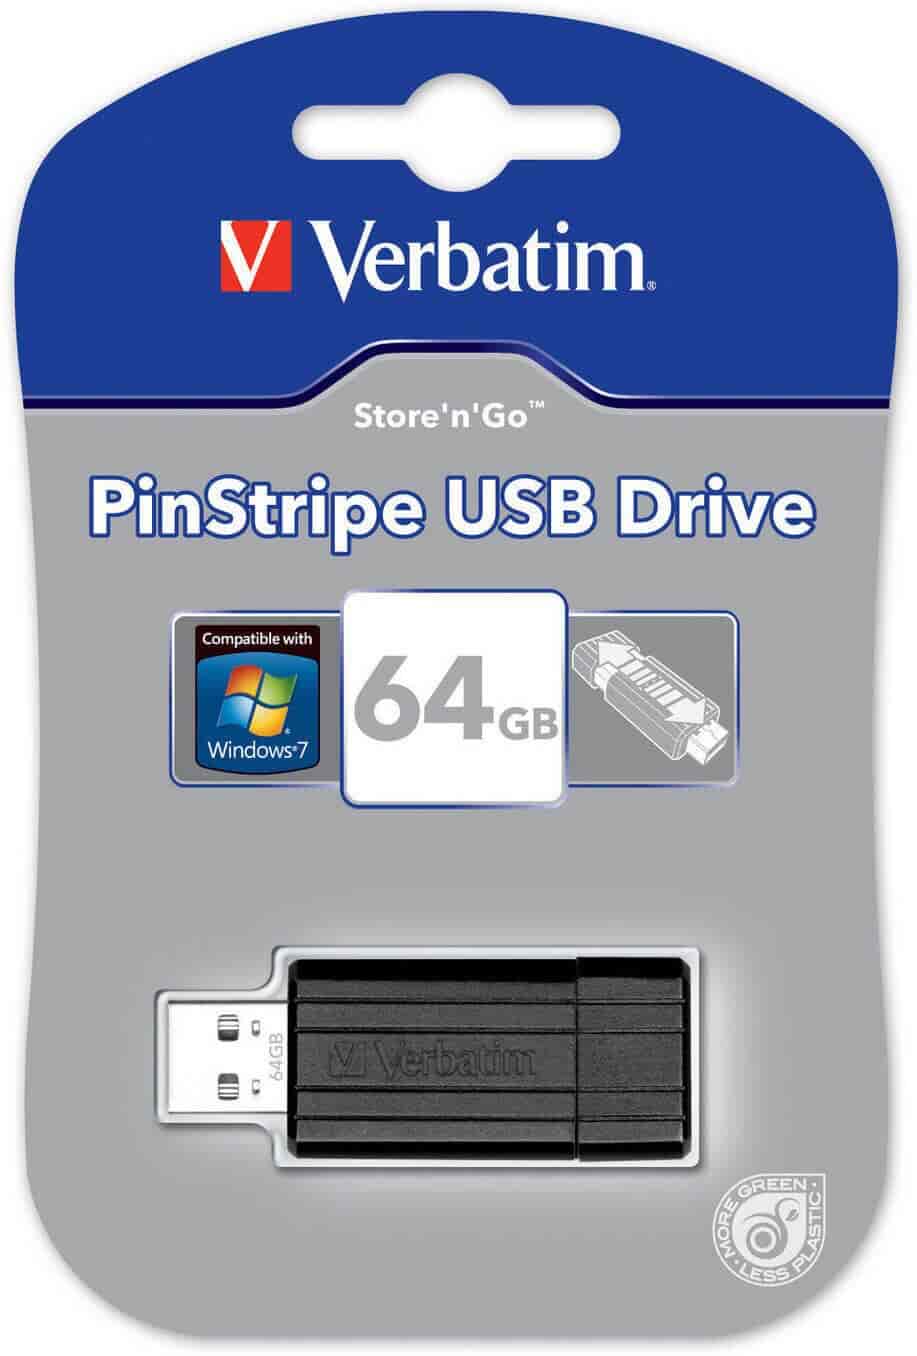 64 GB USB memory stick, Verbatim Hi-Speed Store'N'Go PinStribe